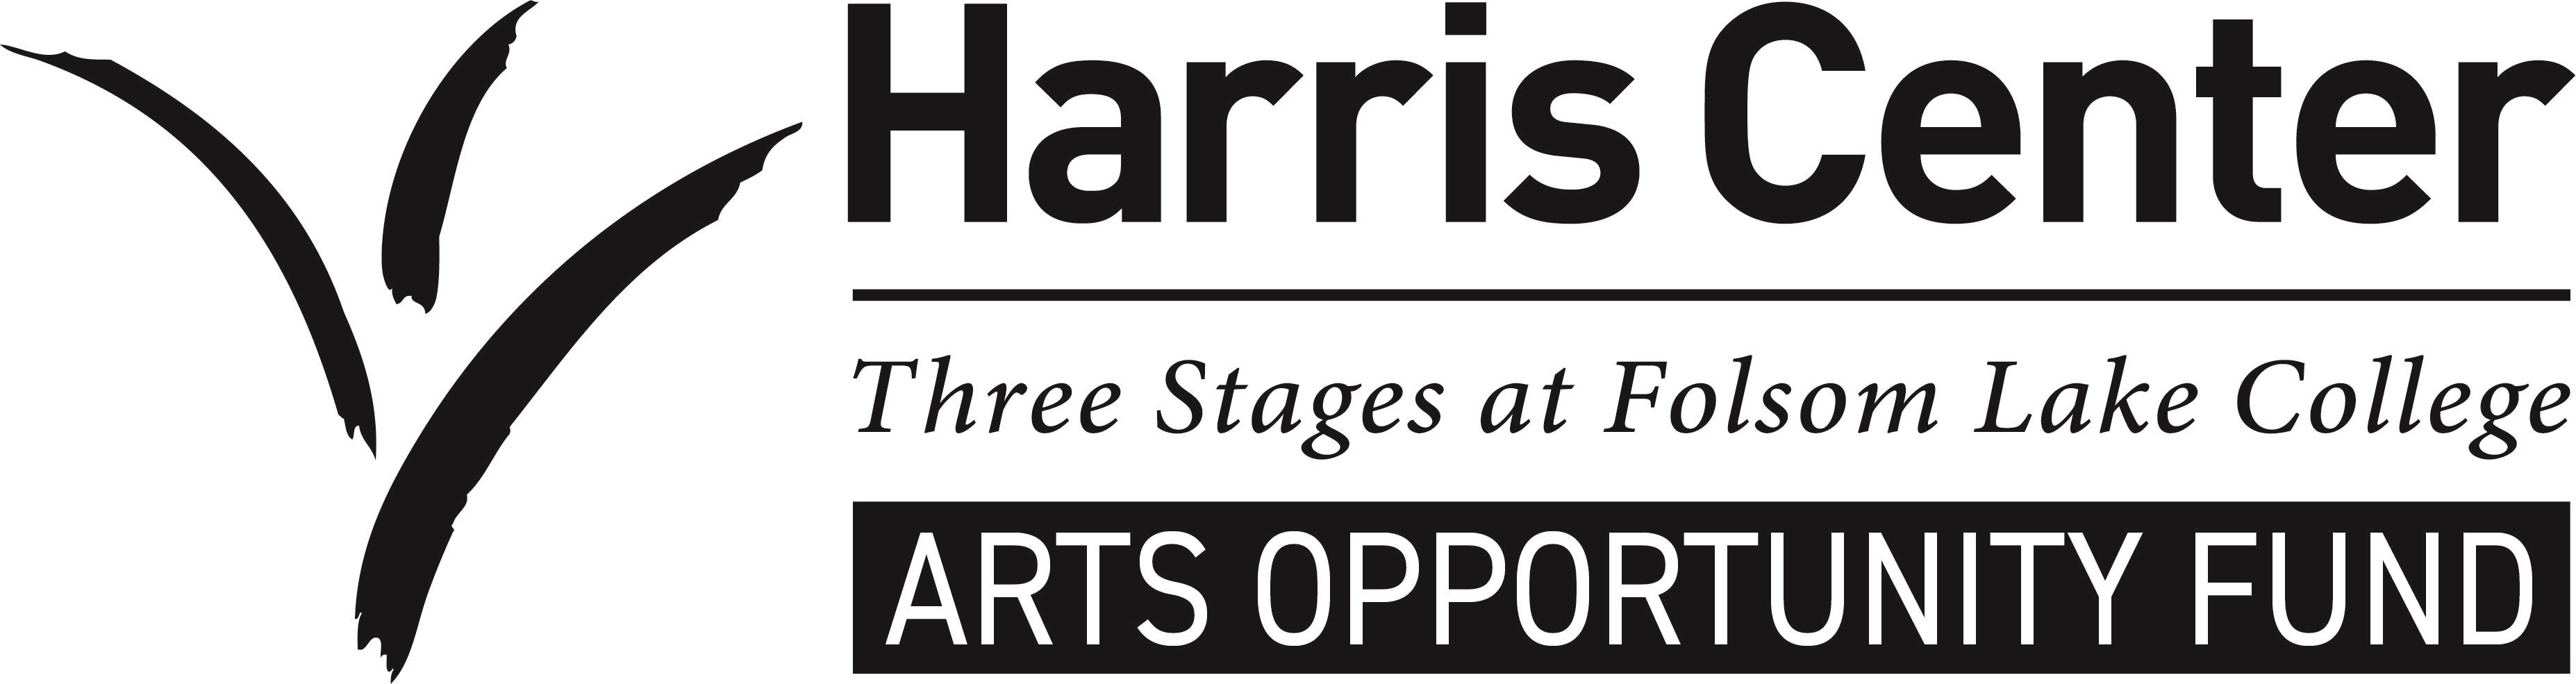 Harris Center Arts Opportunity Fund